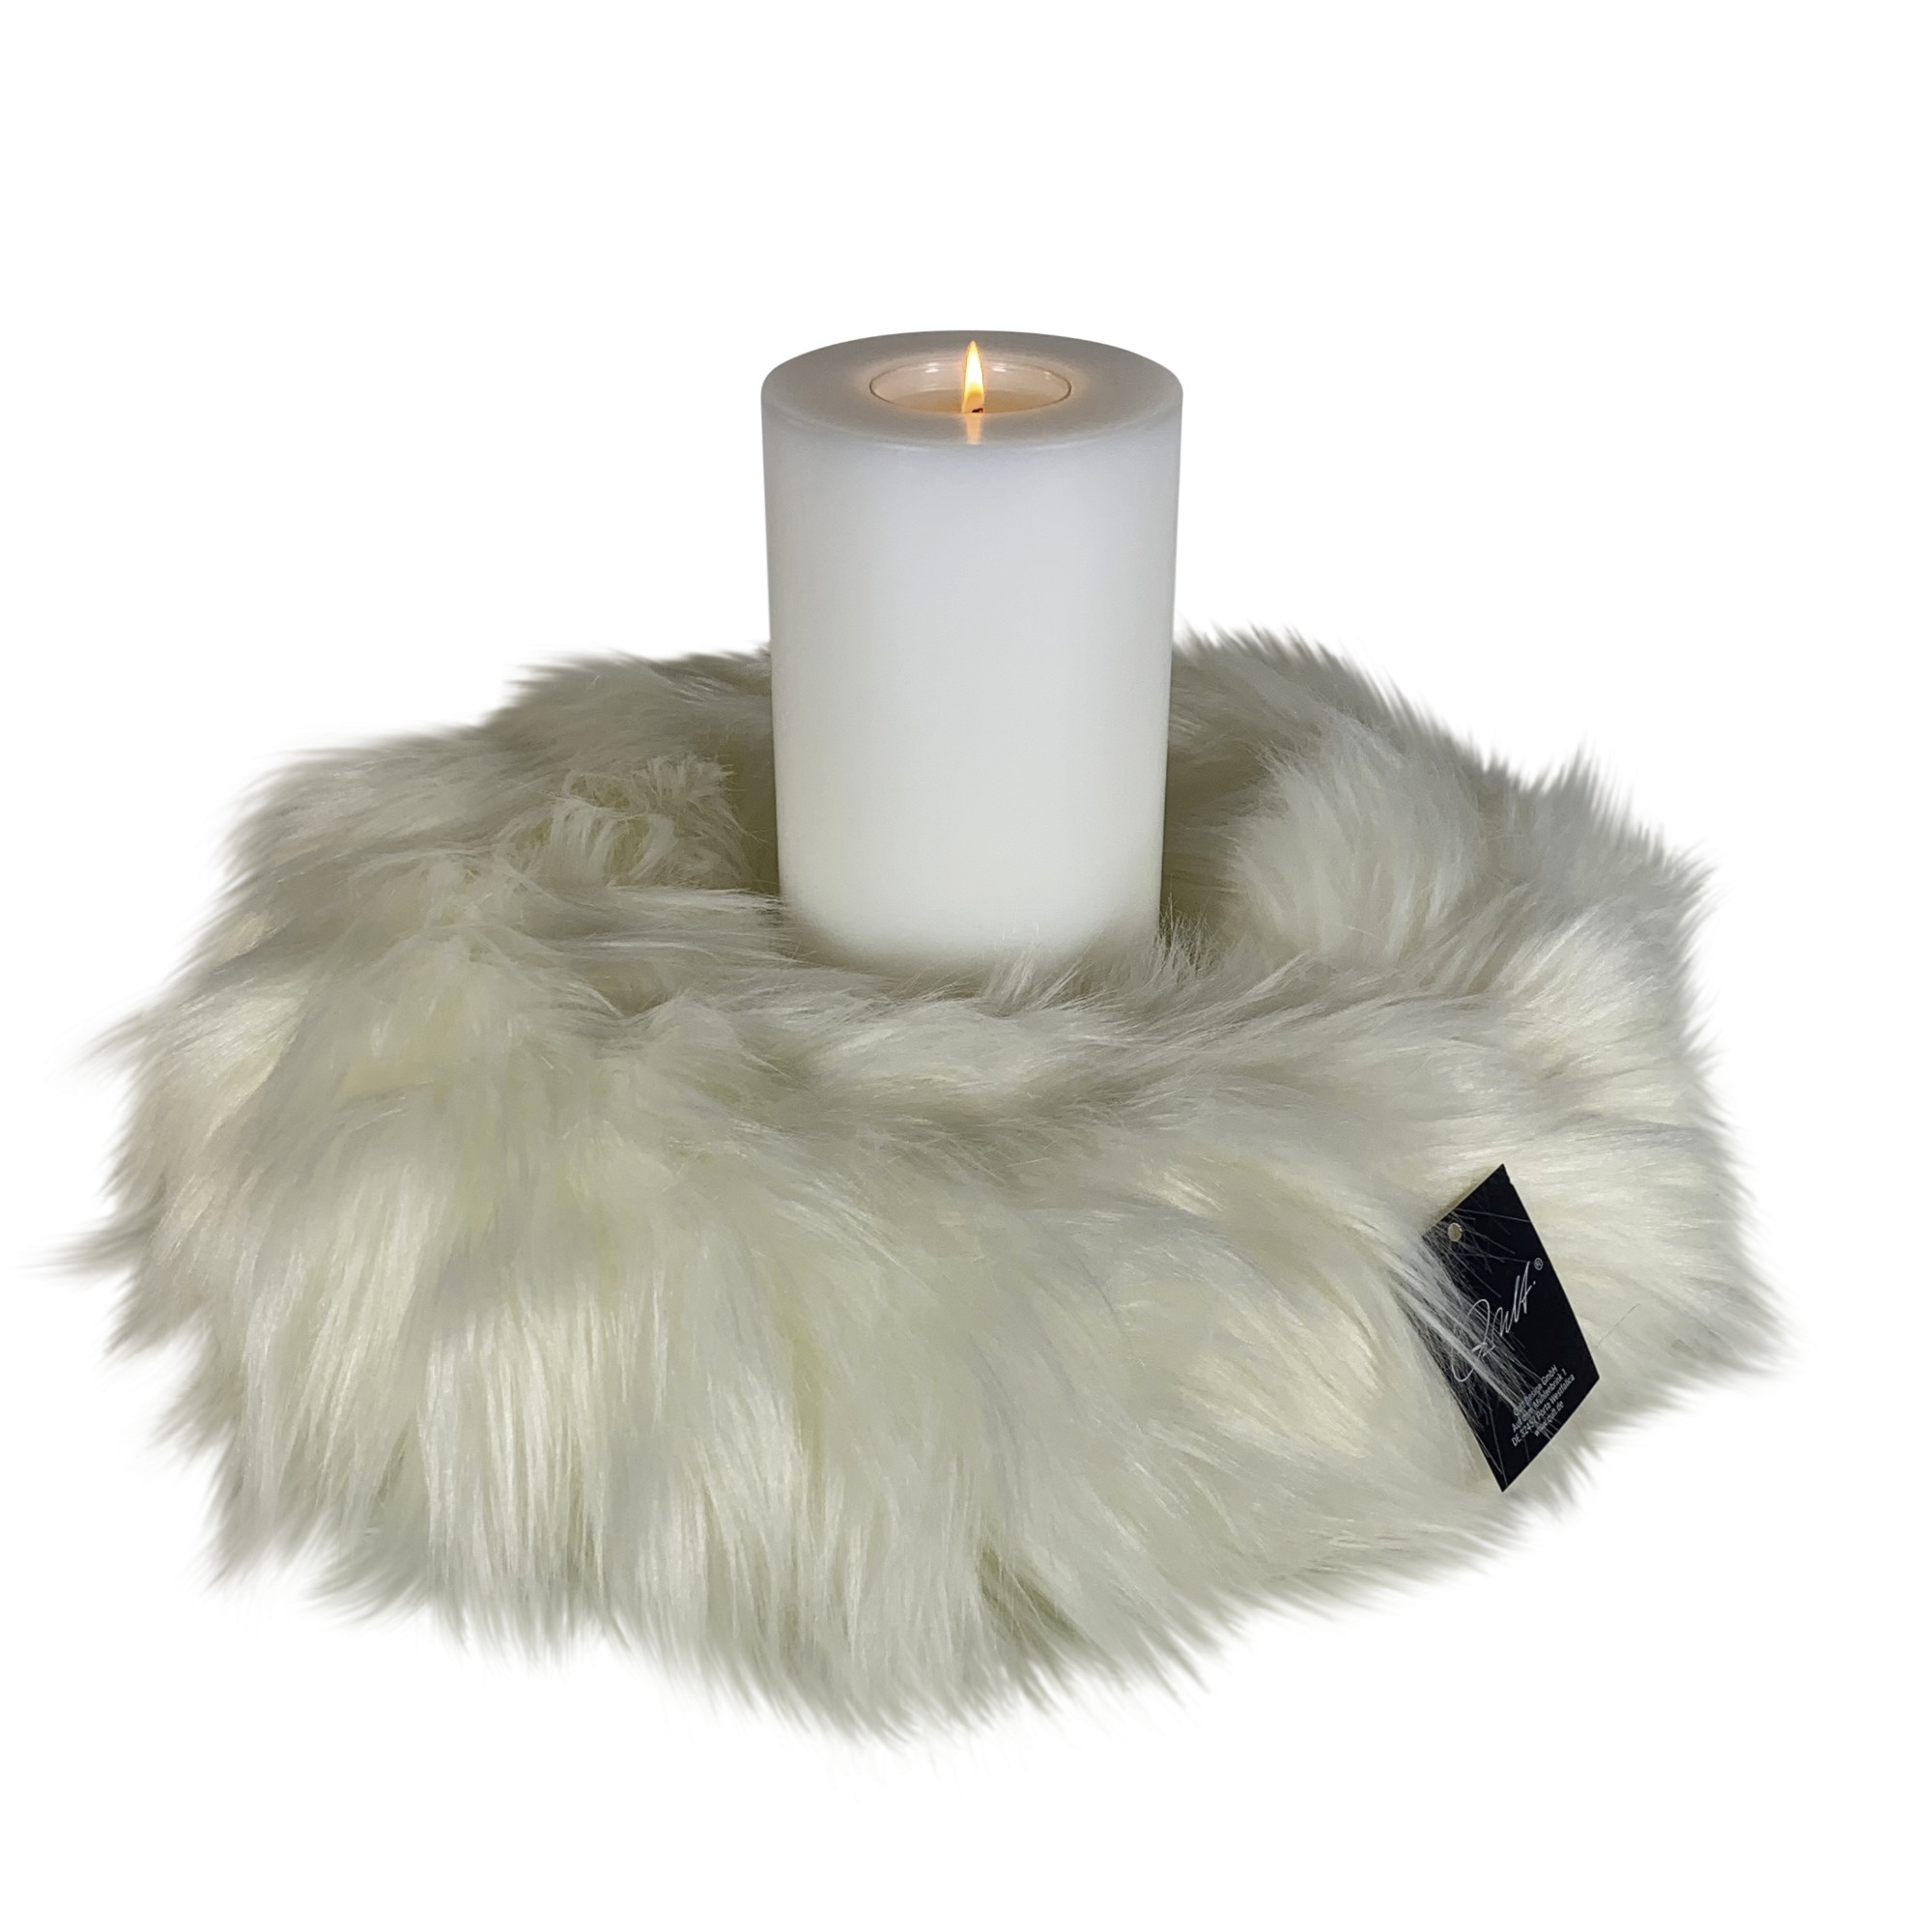 Qult Farluce Candle - Milano Woven White - Candle wreath - Ø 45 cm x H Fur 10 cm